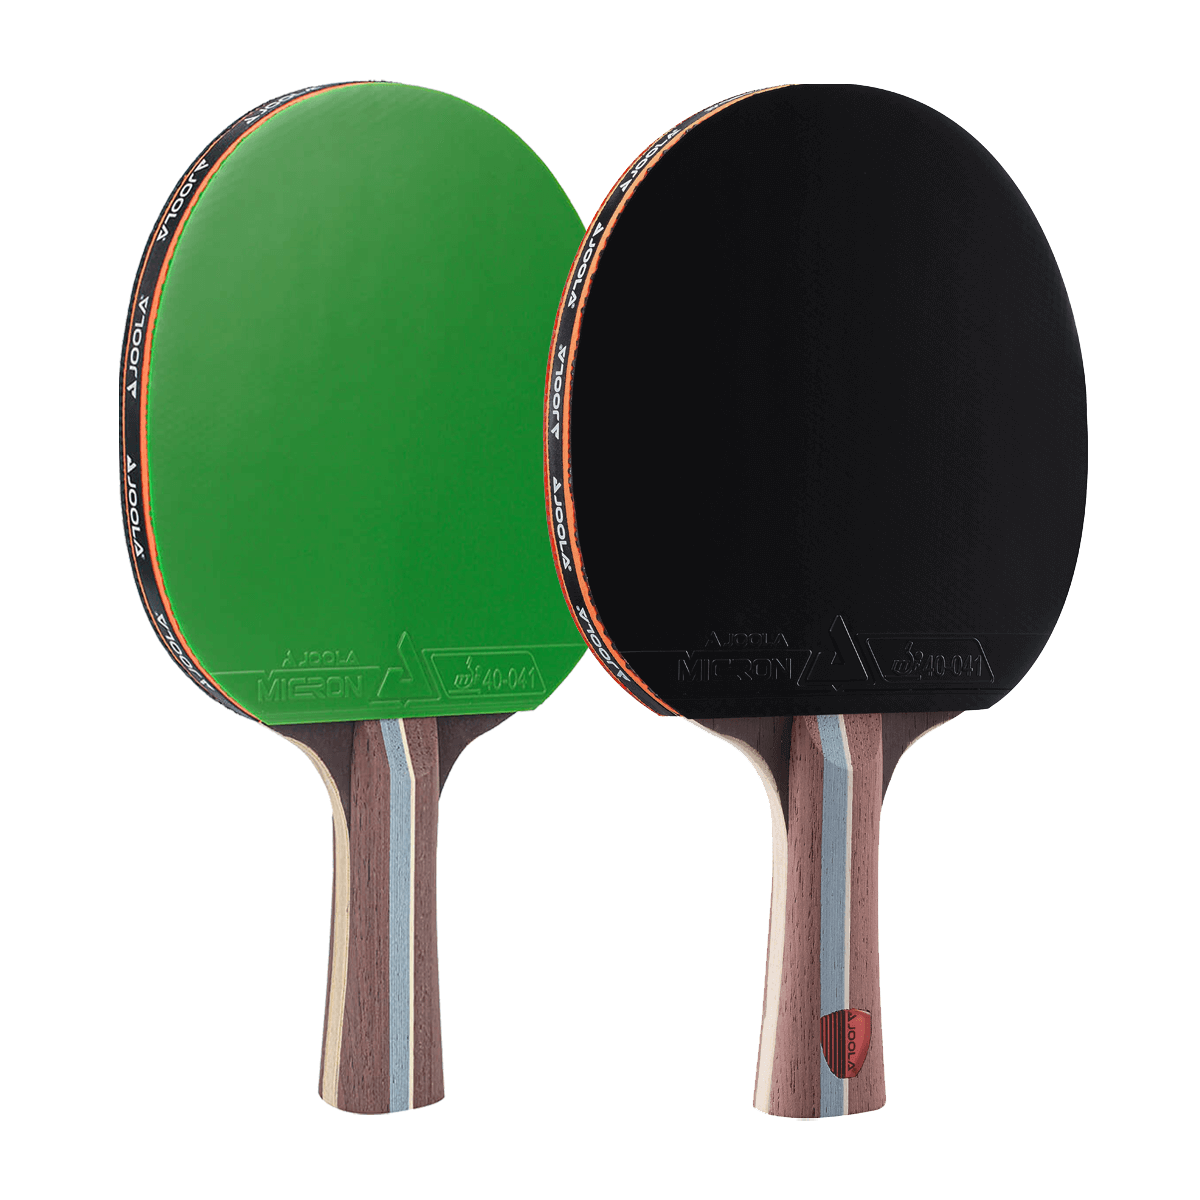 JOOLA Infinity Balance Table Tennis Racket with Micron Rubber